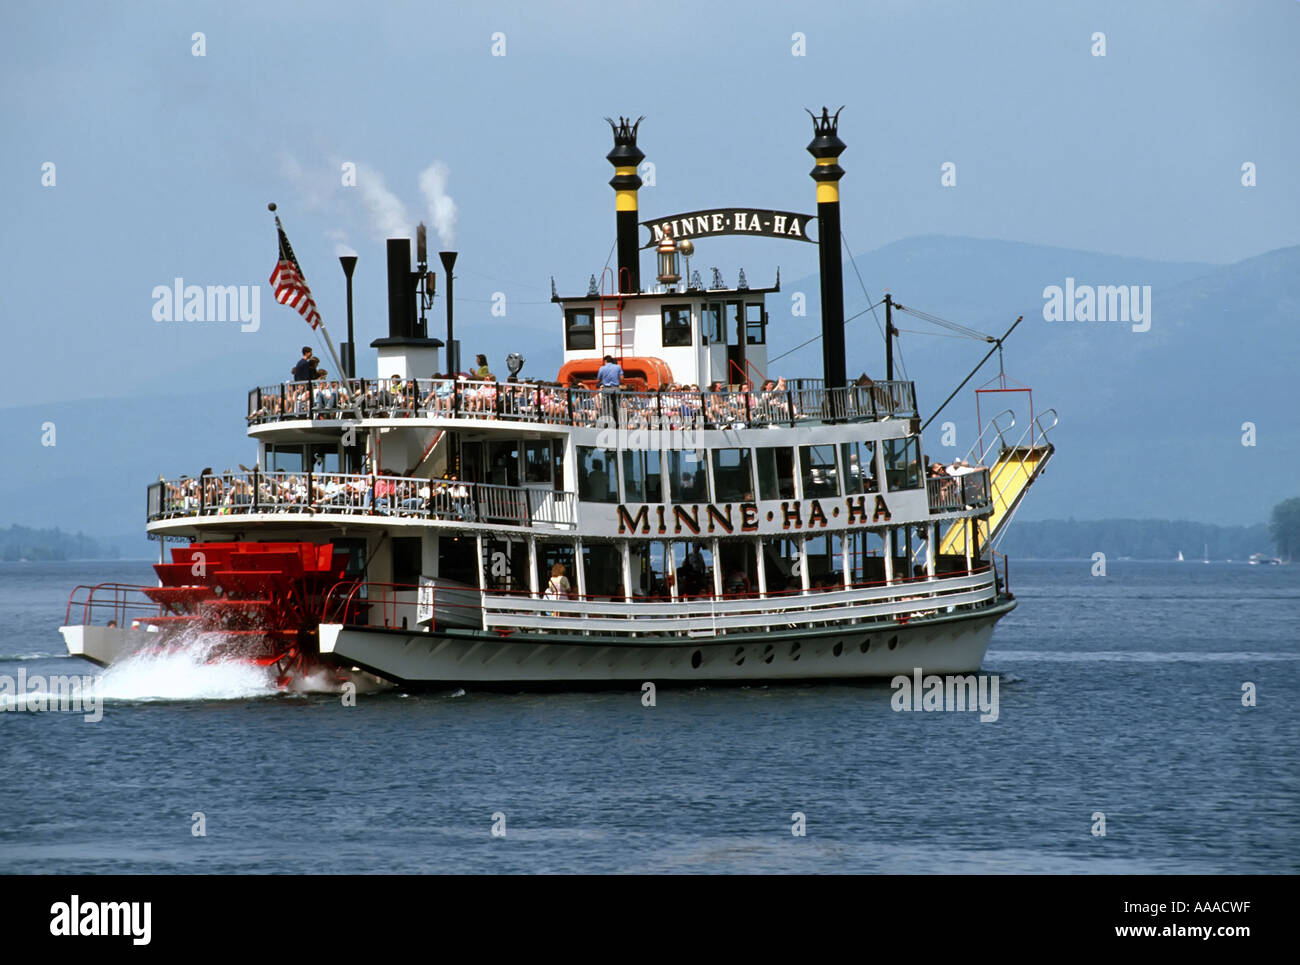 Minne Ha Ha tourist ship boat on the Lake George New York NY resort region Stock Photo